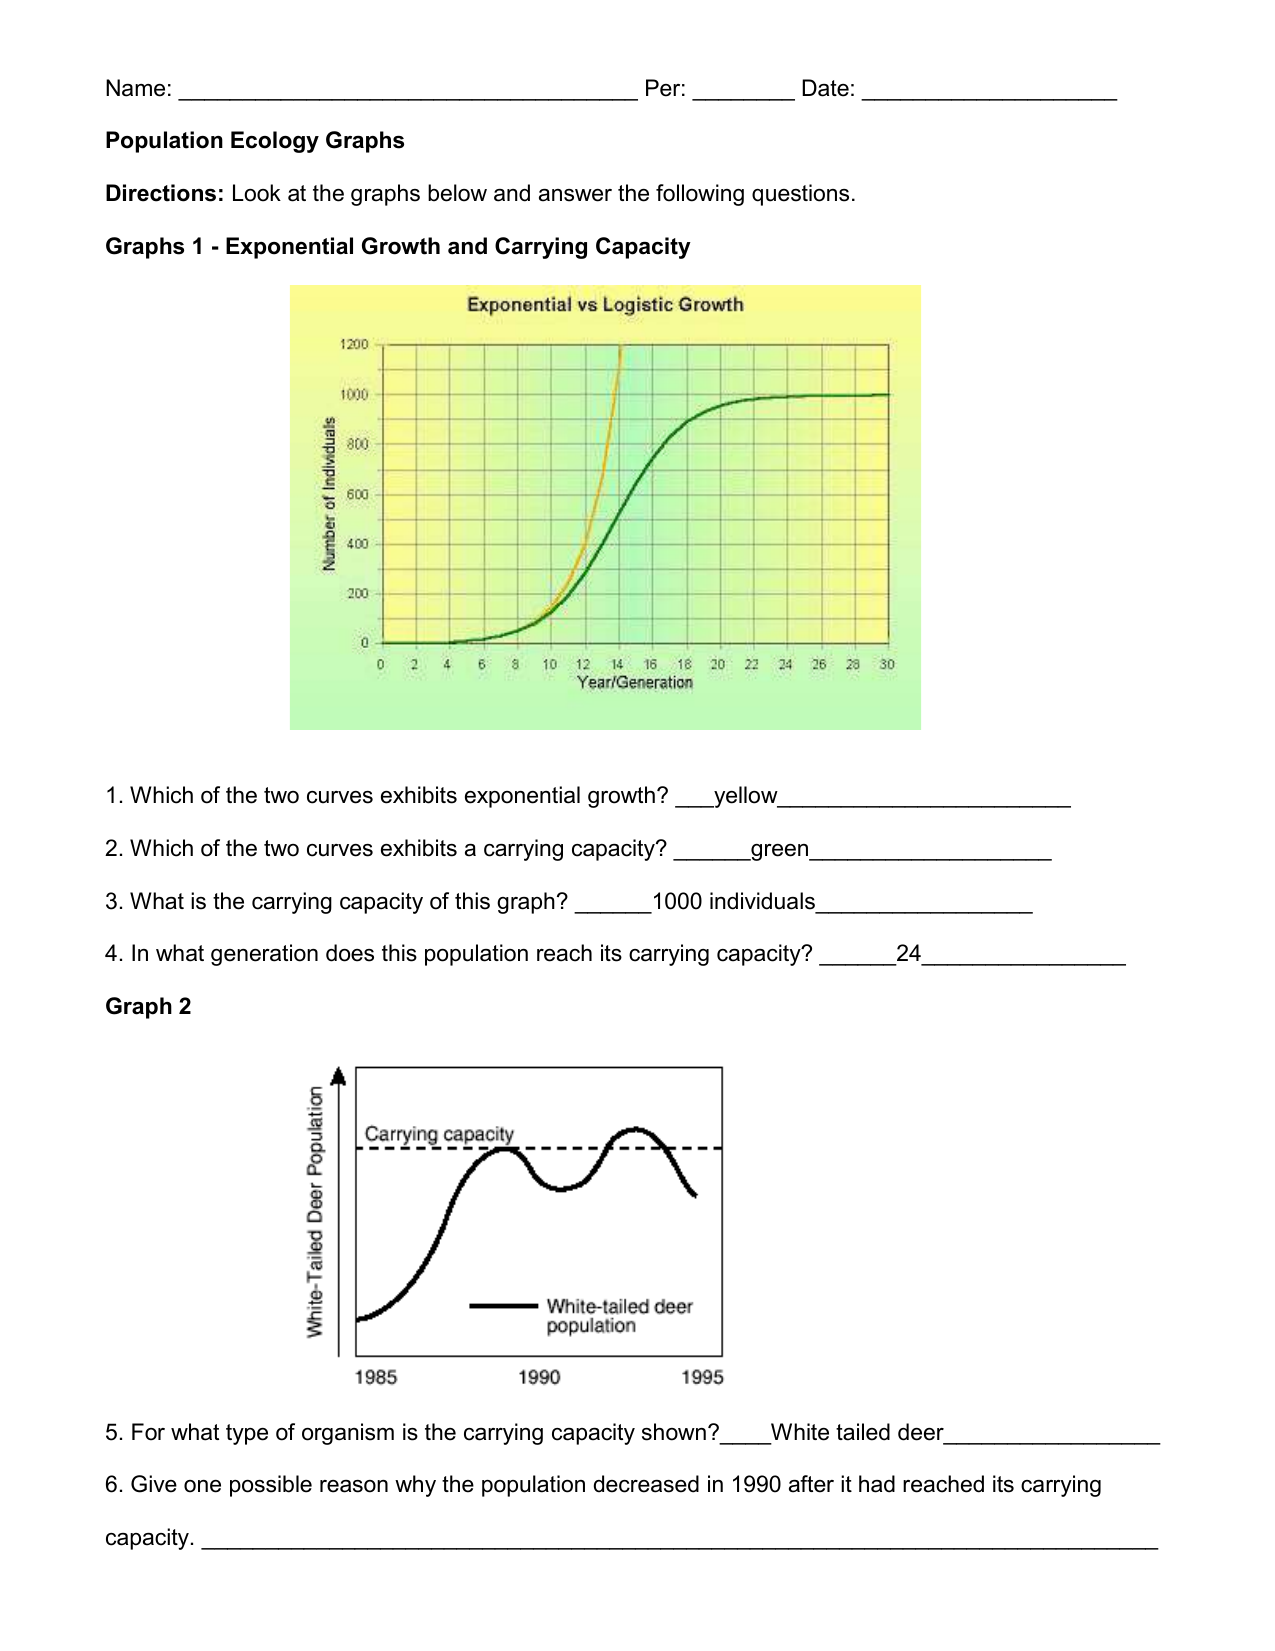 Population-Ecology-Graph-Worksheet key For Population Ecology Graph Worksheet